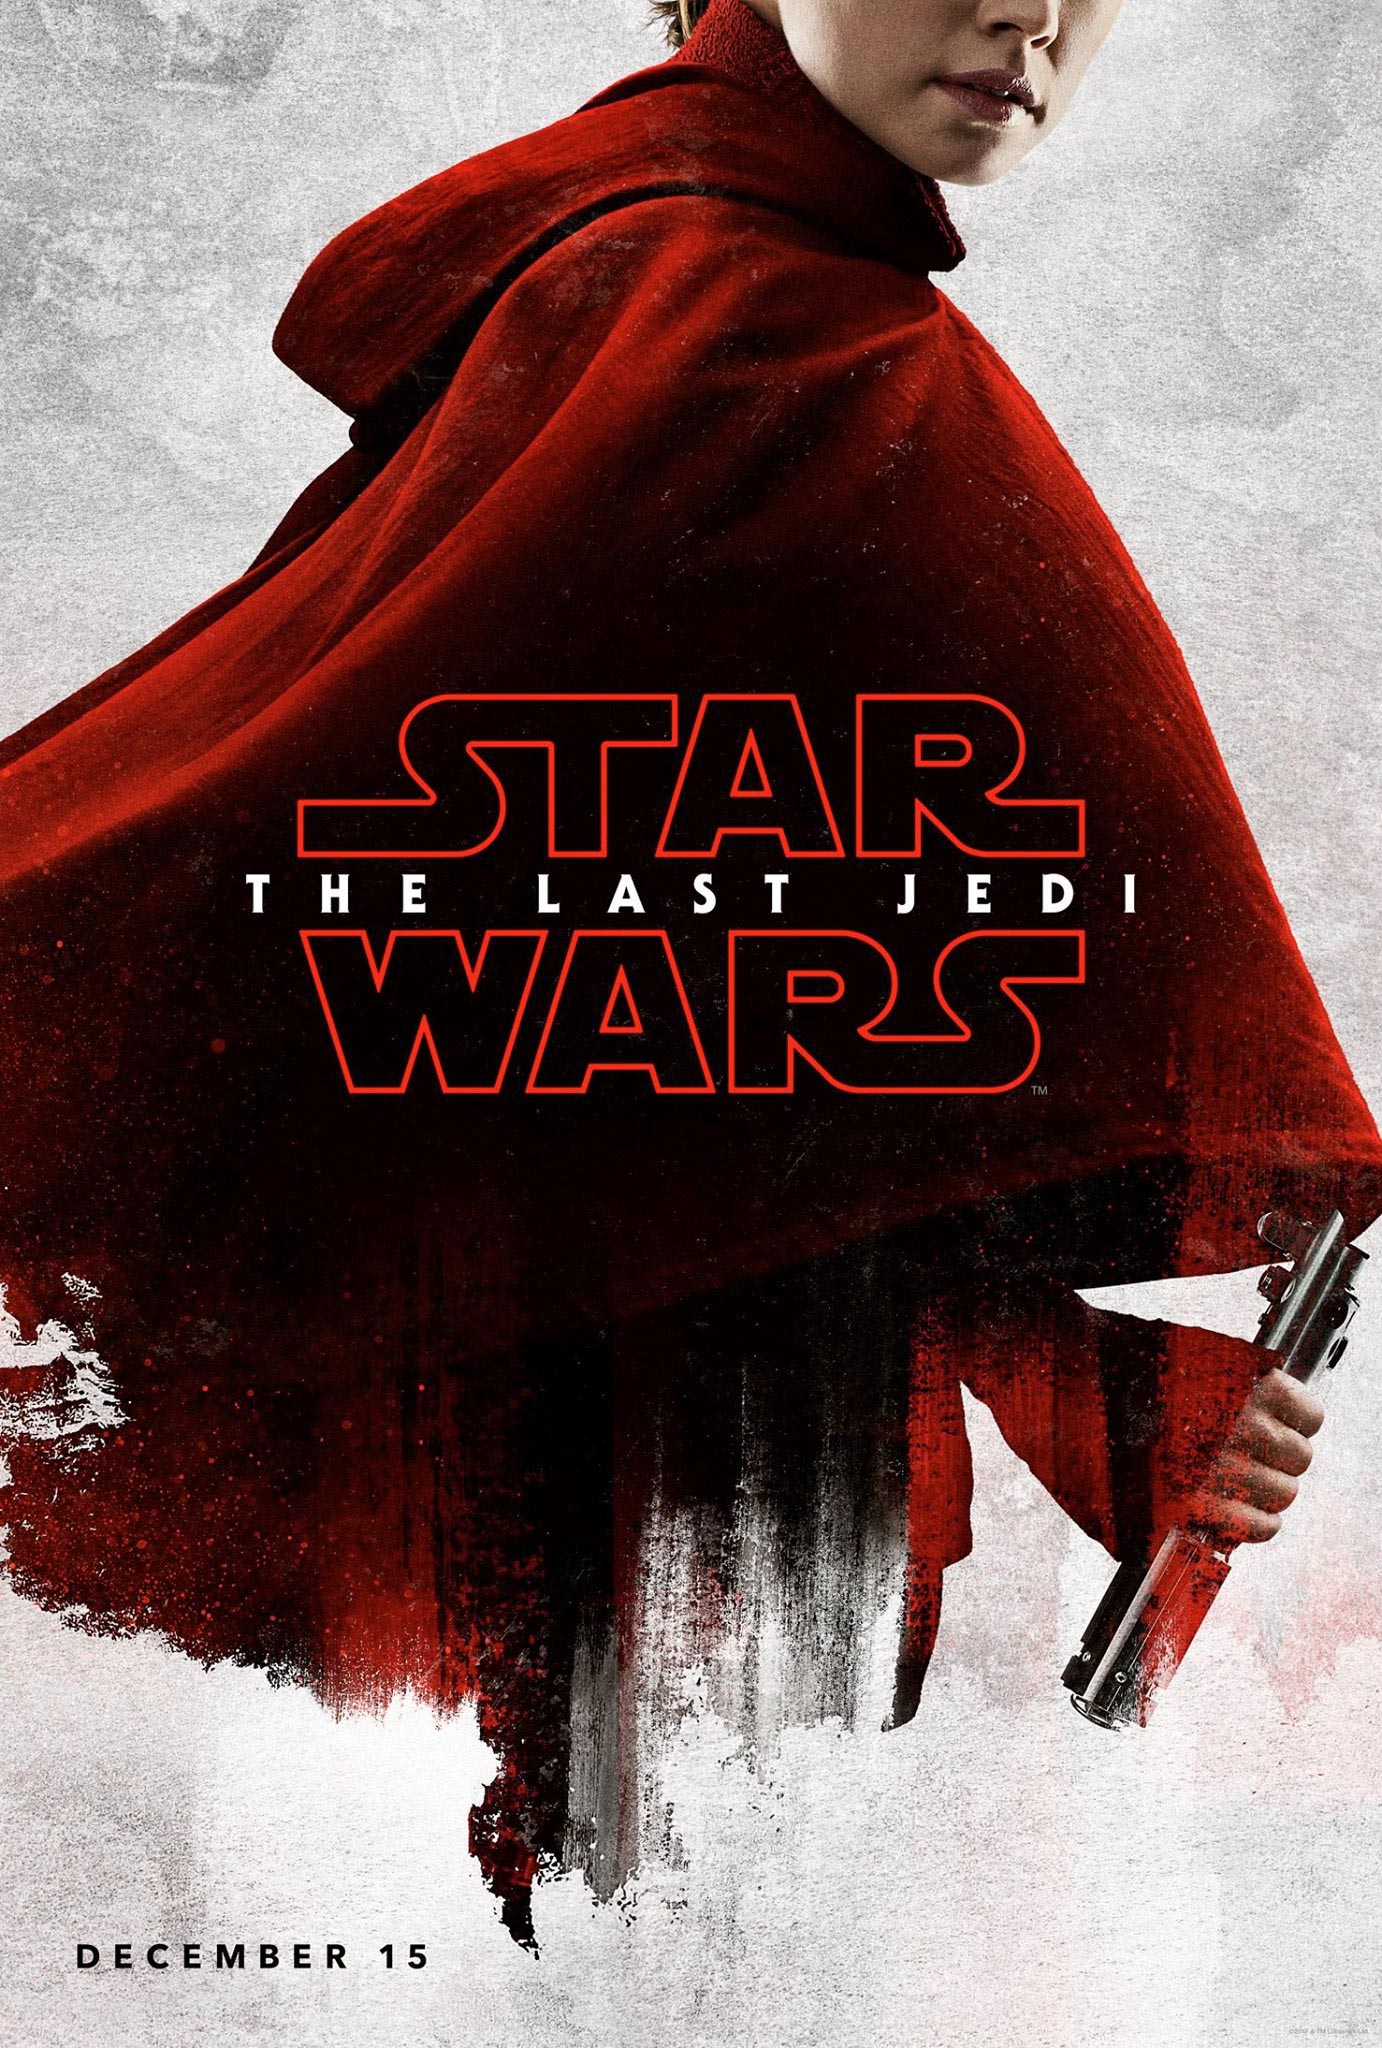 Star Wars Ep. VIII: The Last Jedi for mac download free